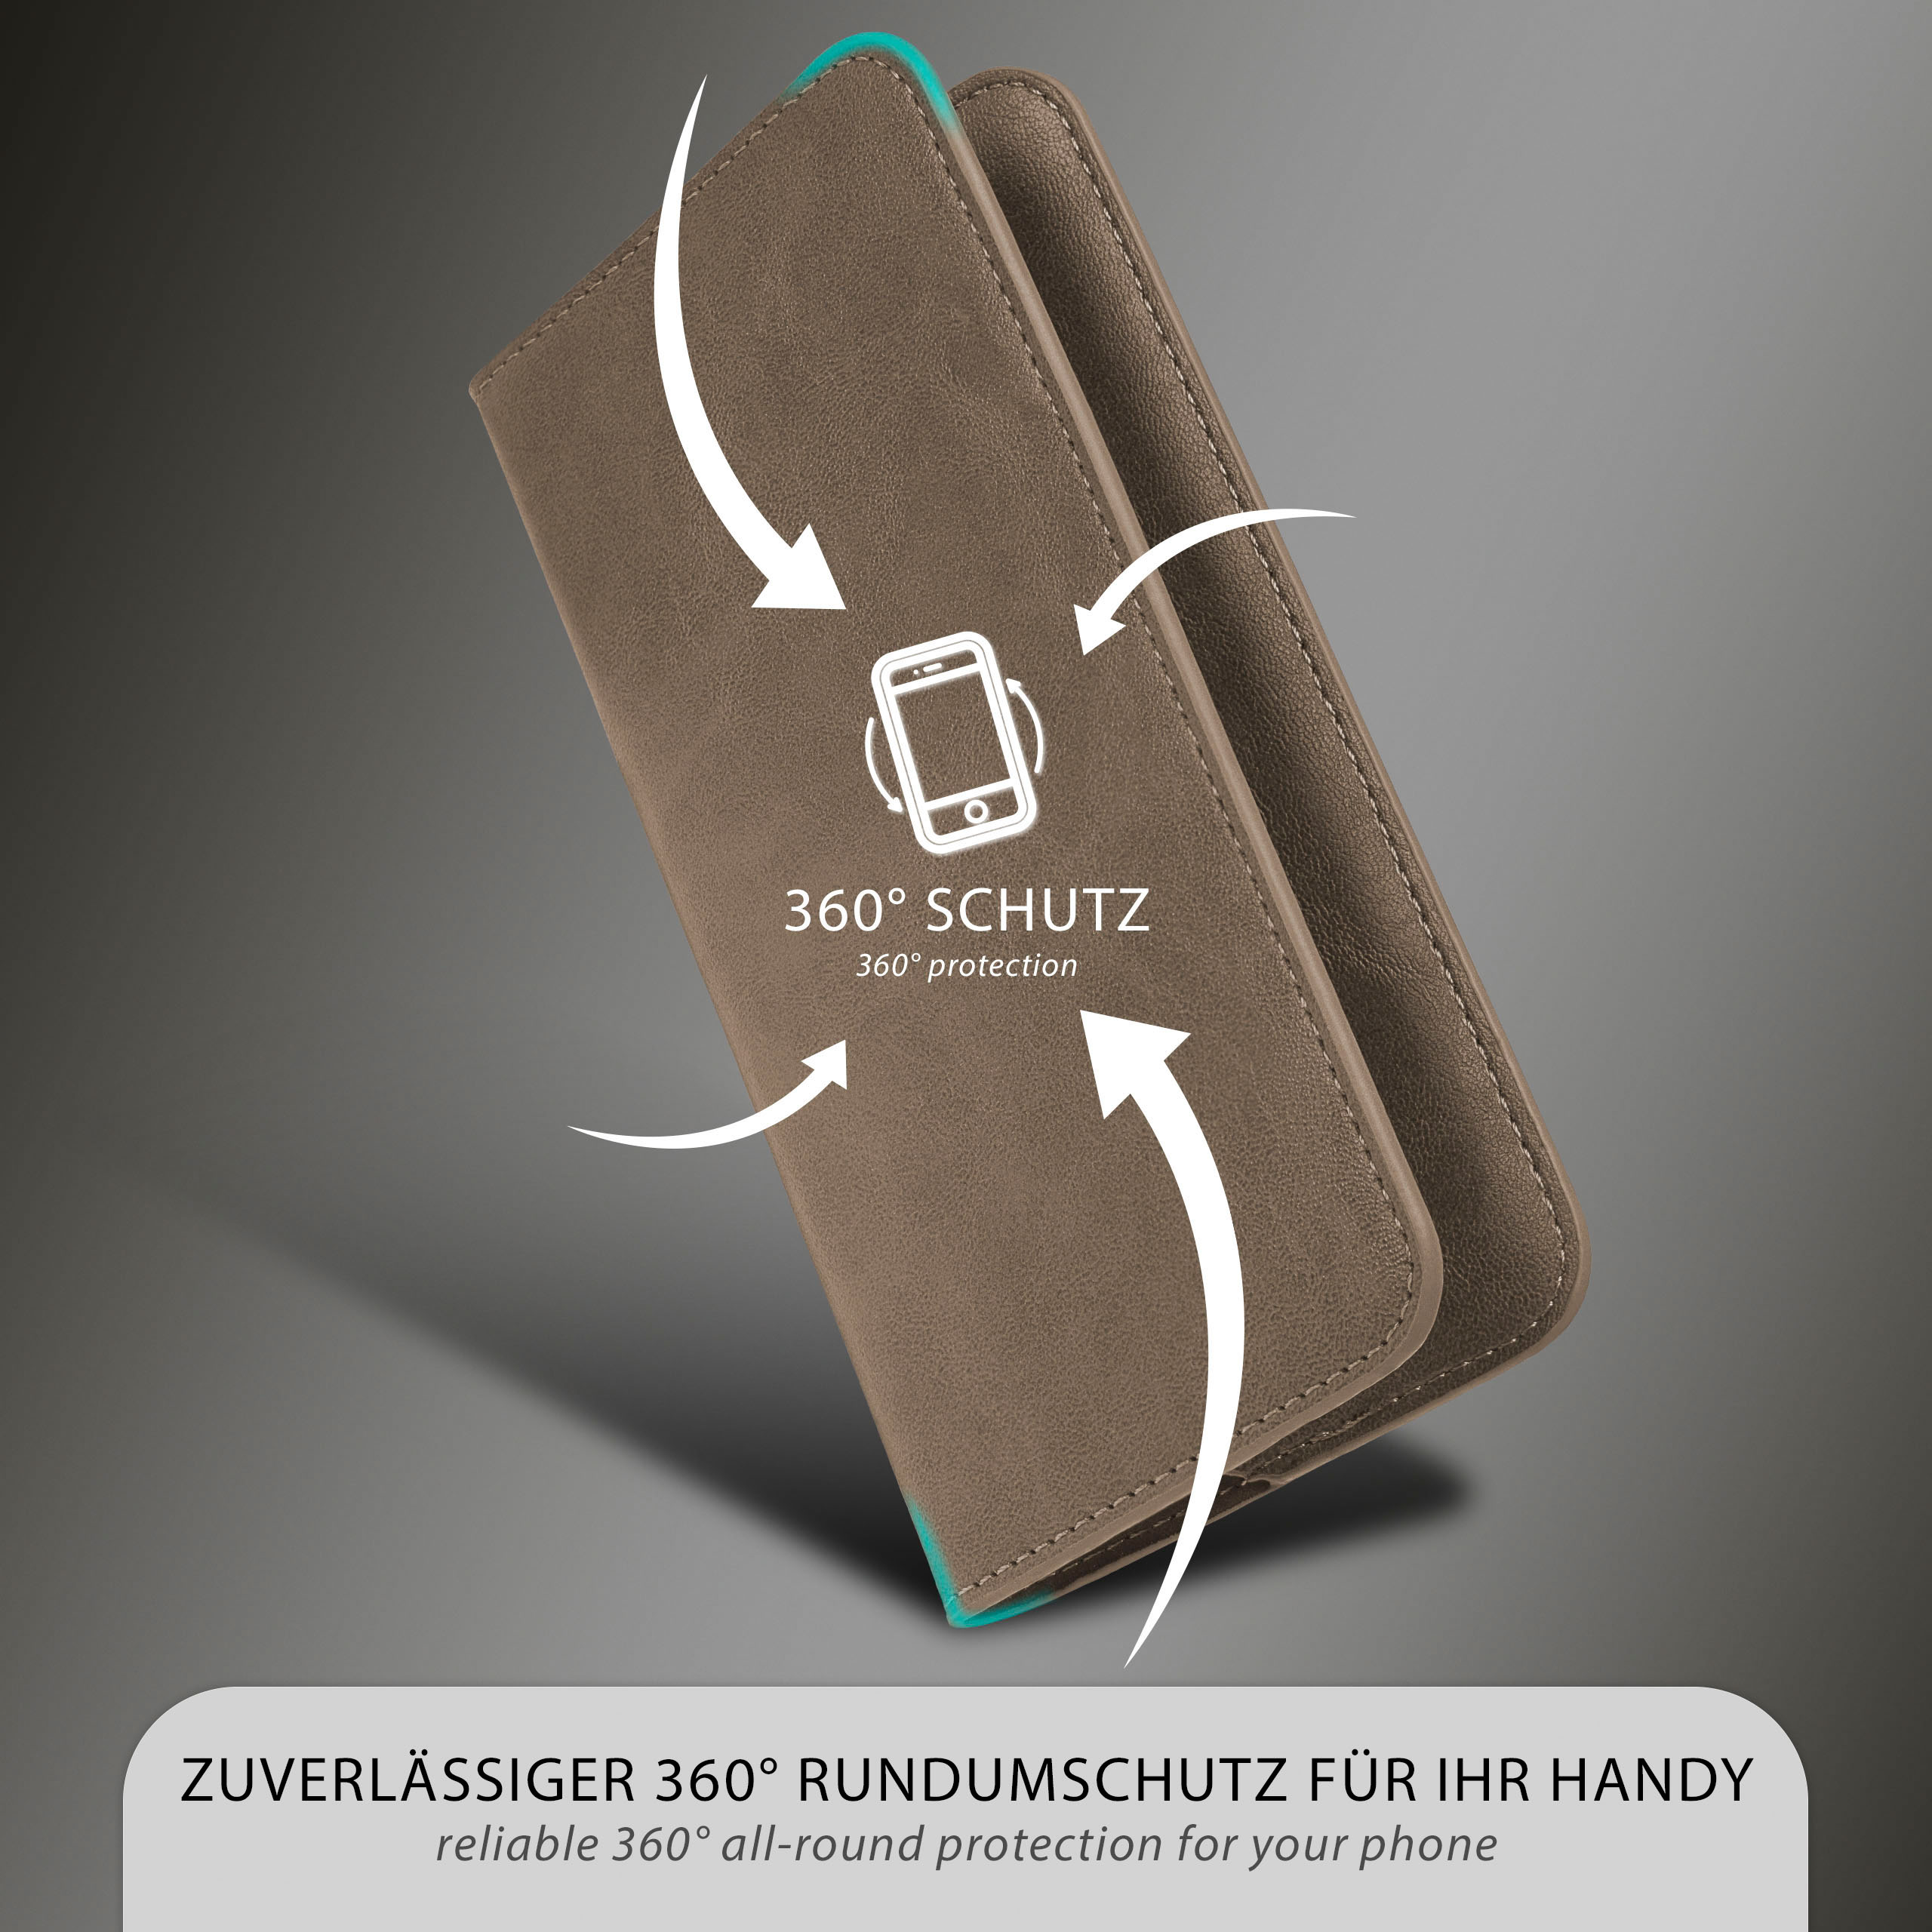 Galaxy Flip Cover, A6 (2018), Case, MOEX Plus Samsung, Purse Oliv